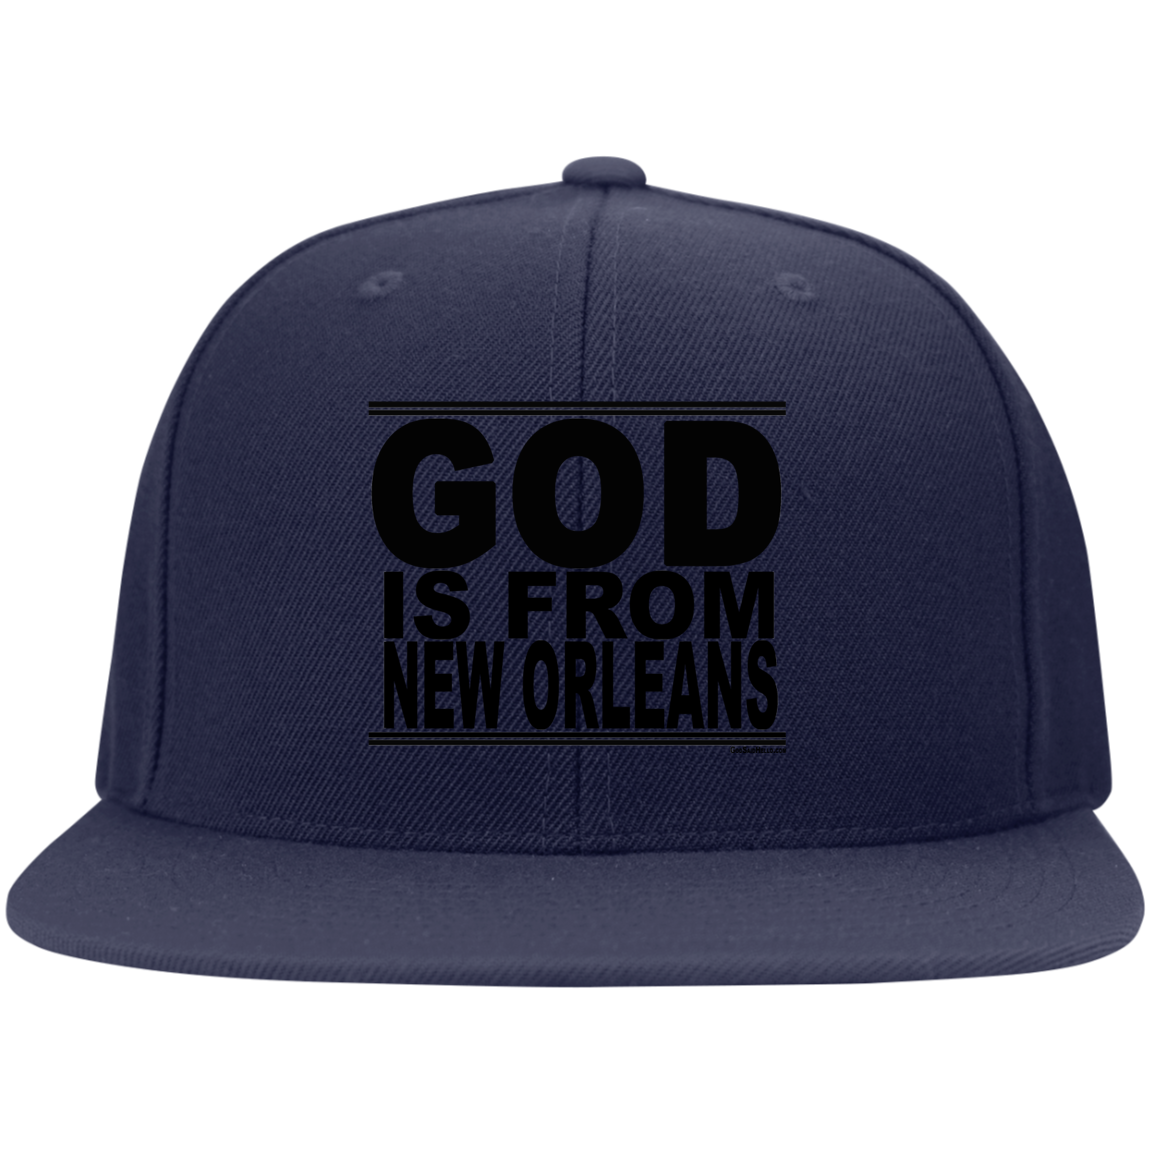 #GodIsFromNewOrleans - Snapback Hat